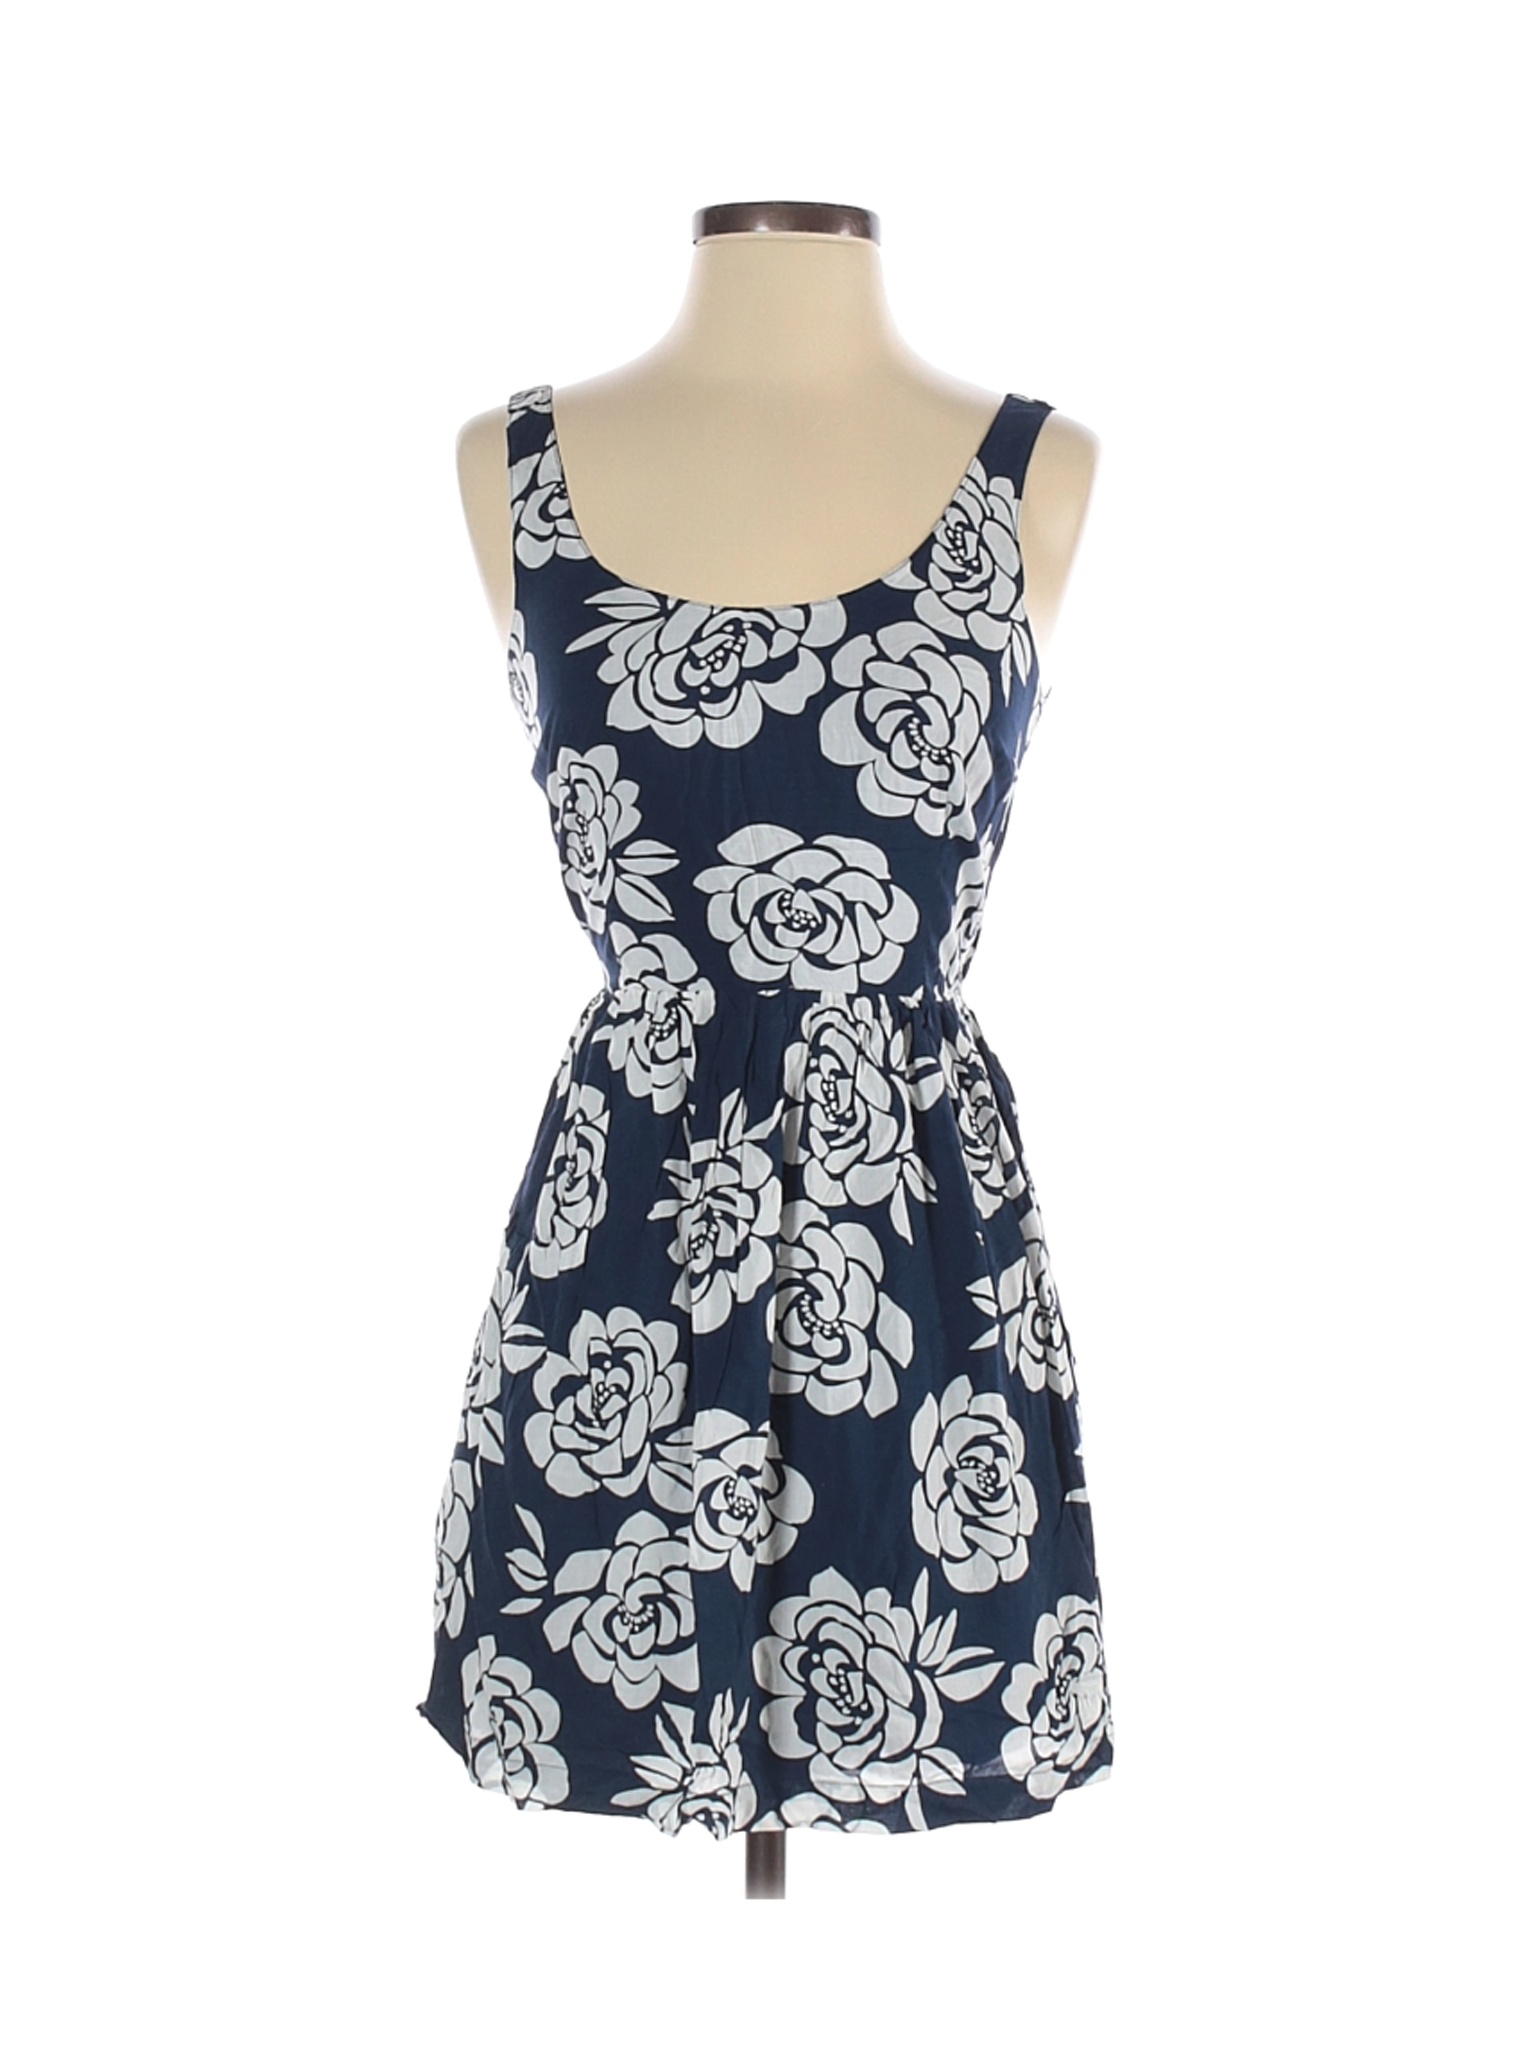 Abercrombie & Fitch Women Blue Casual Dress S | eBay